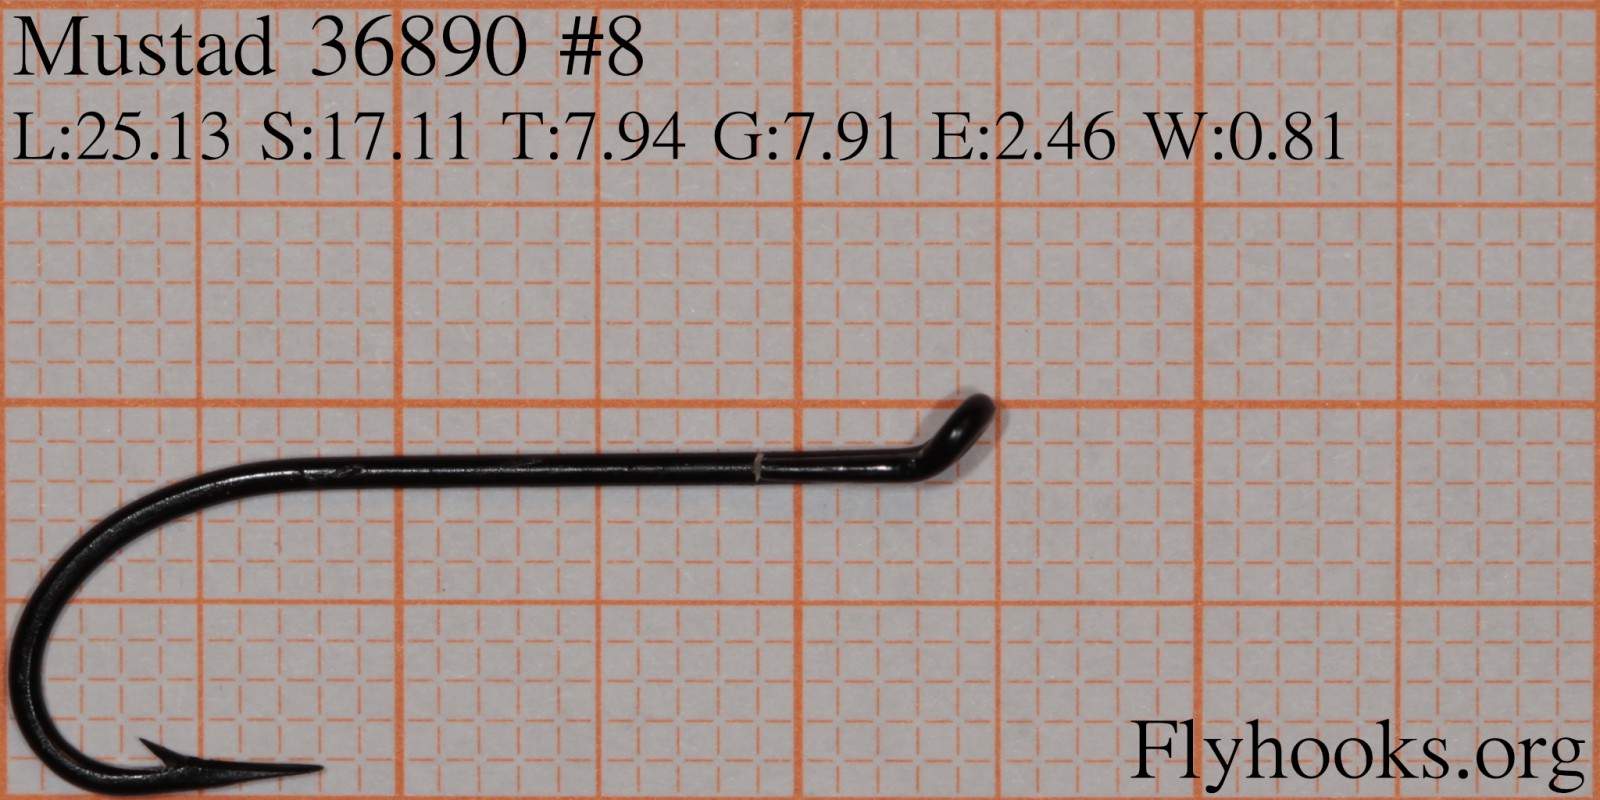 MUSTAD Salmon Single  Qty:25 Hook  SL73UBLN-36890 size:4  2XH/3XL needle point 